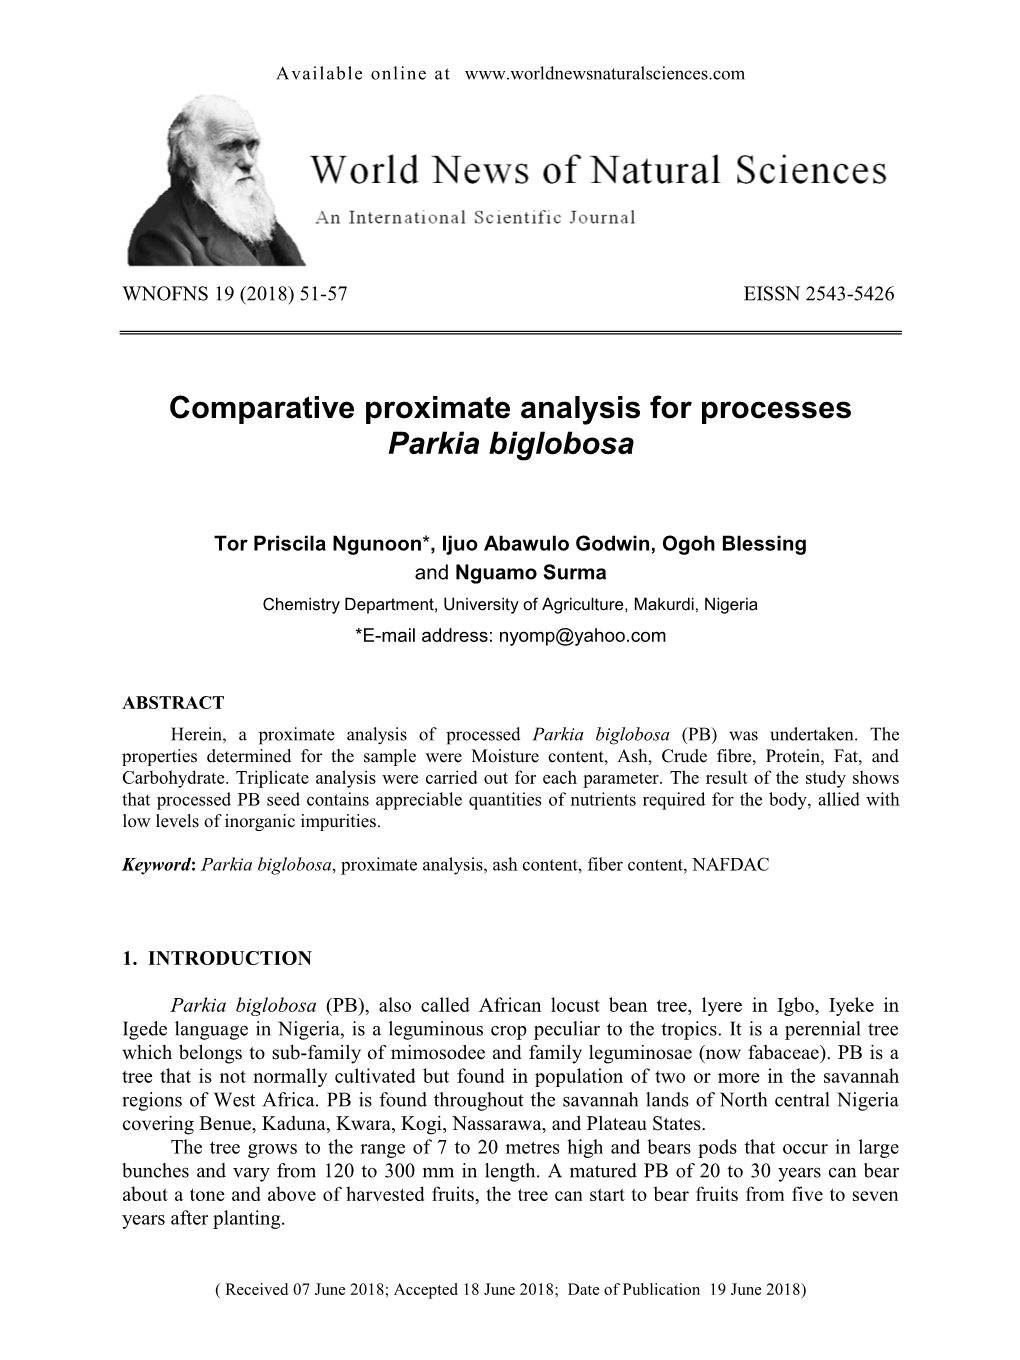 Comparative Proximate Analysis for Processes Parkia Biglobosa